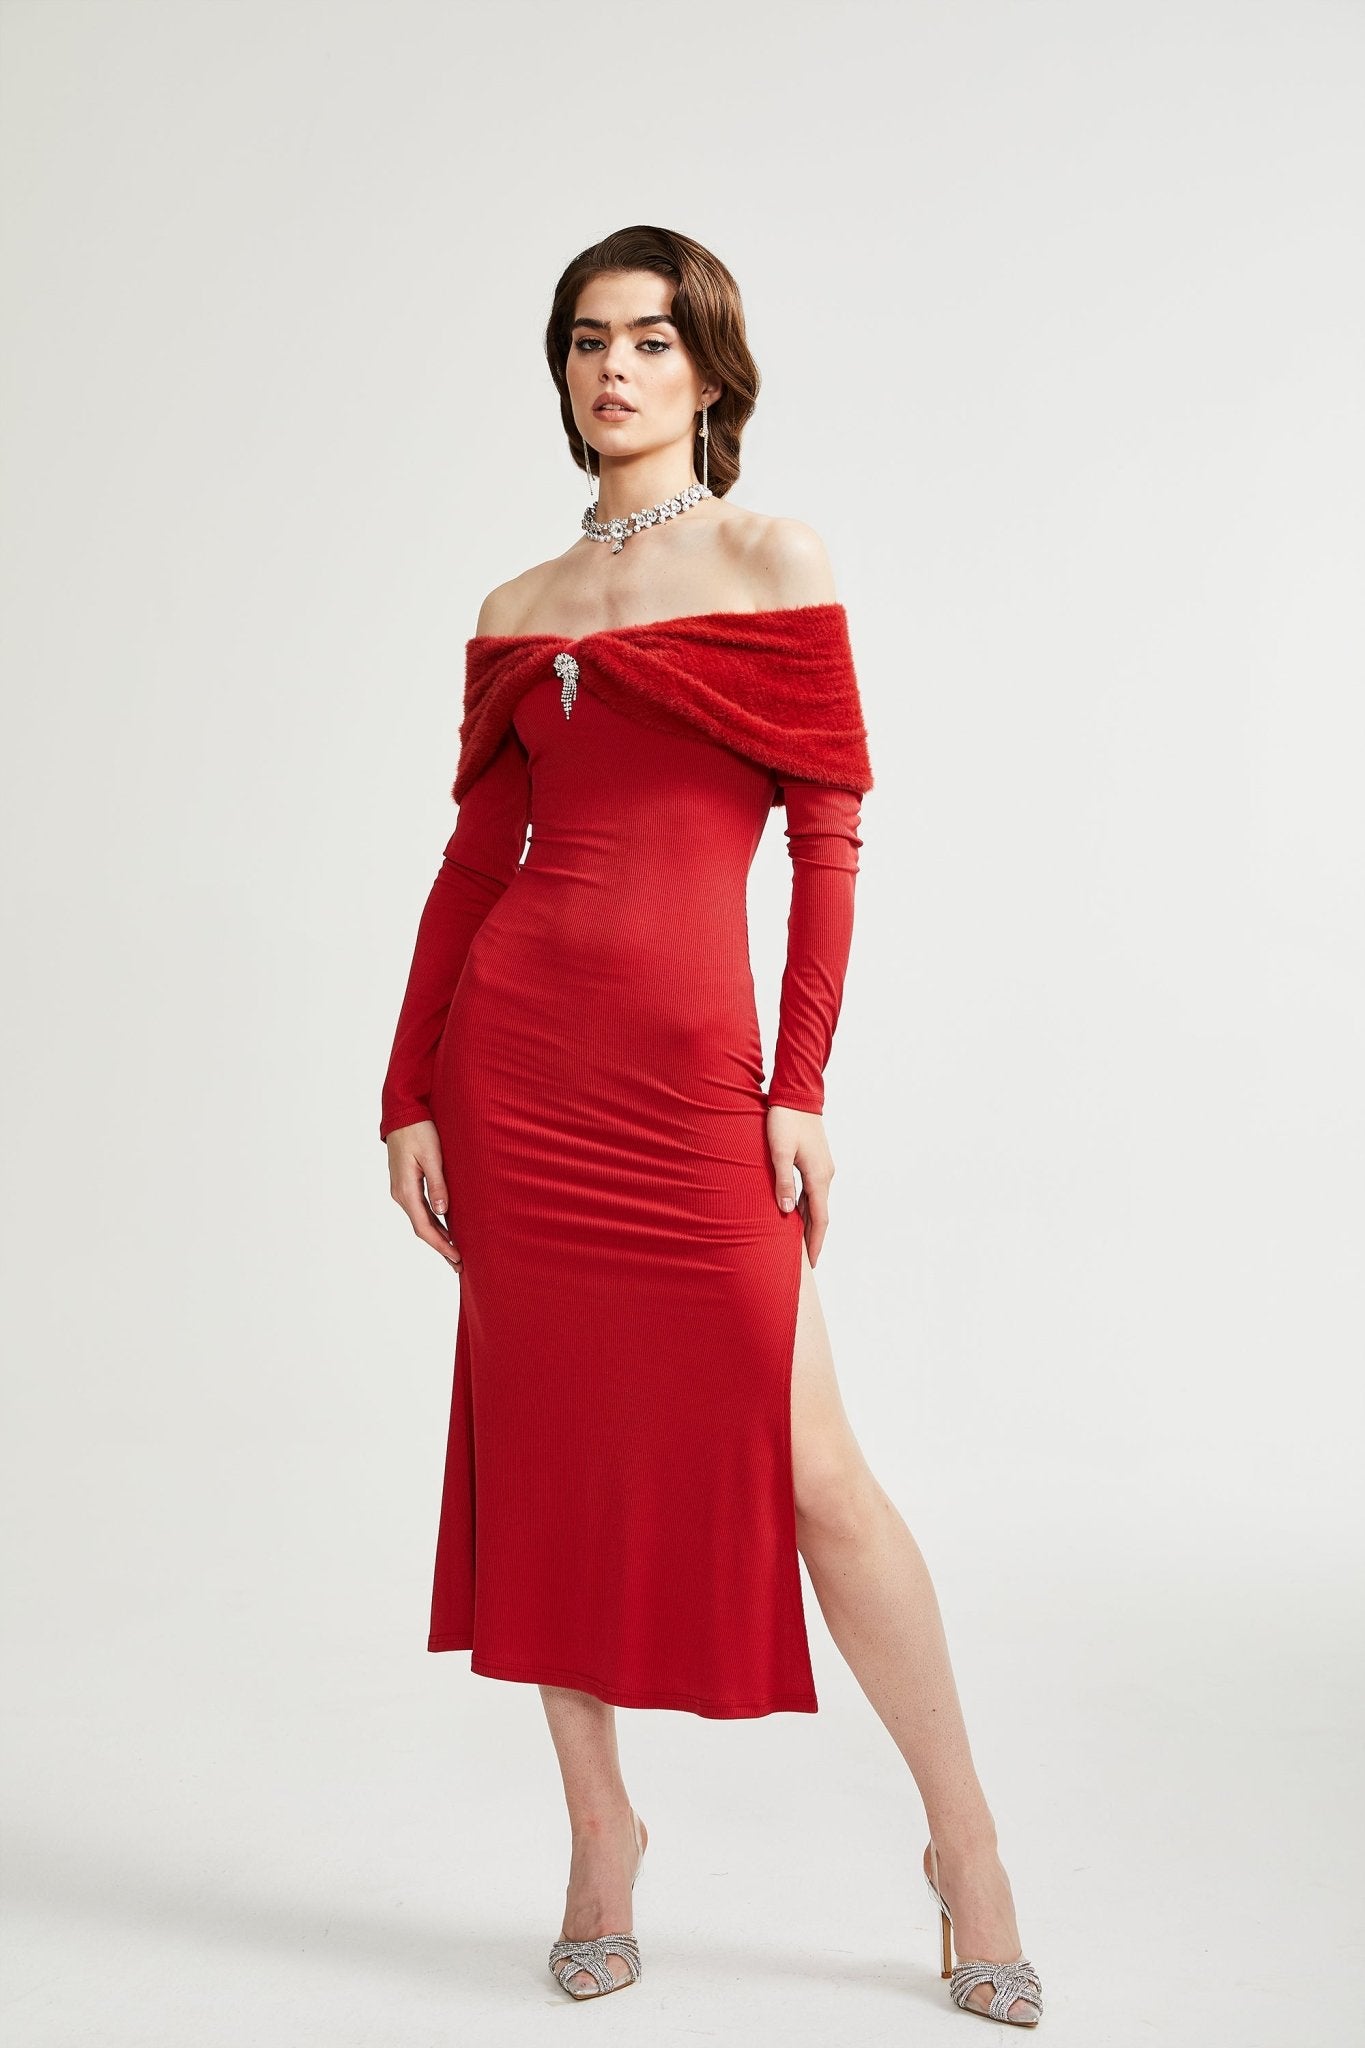 Leonya knitted dress - Miss Rosier - Women's Online Boutique